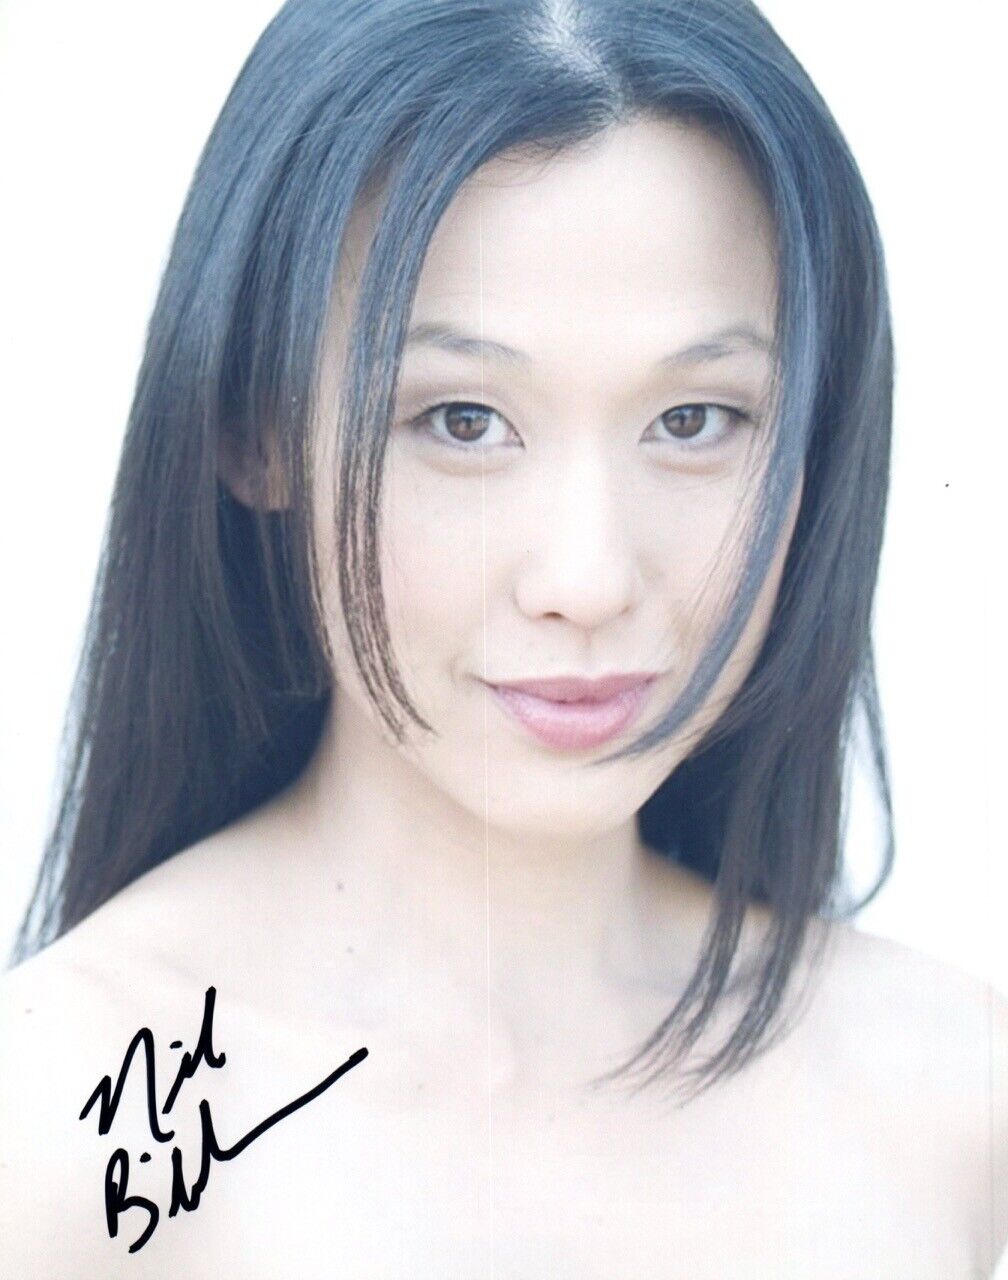 Nicole Bilderback Signed Autographed 8x10 Photo Poster painting Dark Angel Actress COA